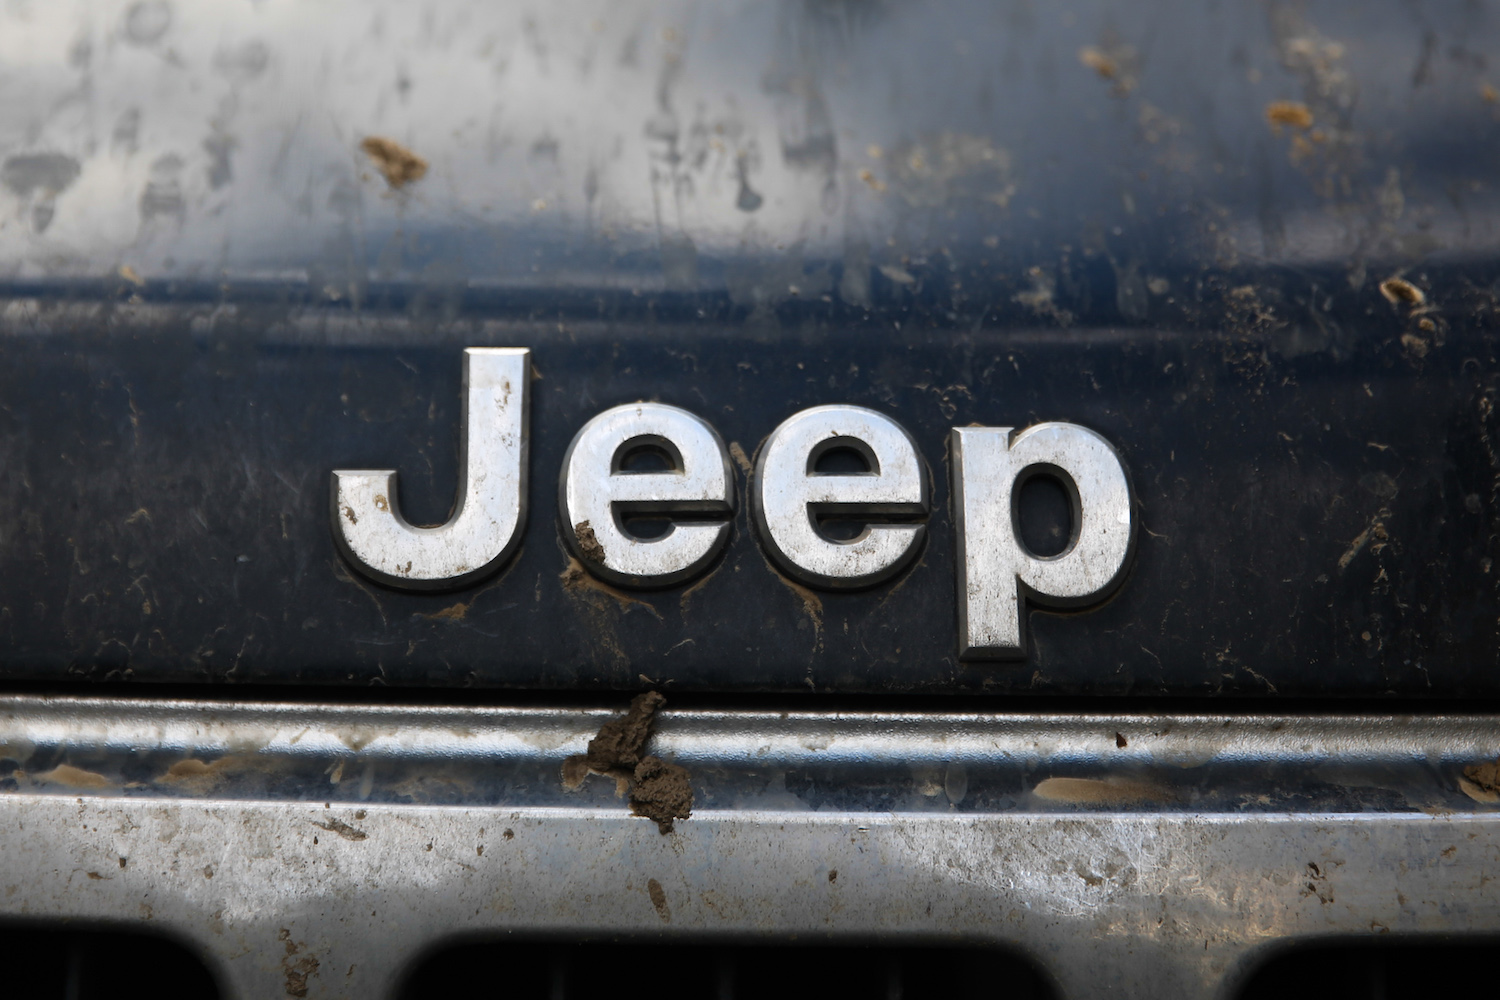 A muddy Jeep logo representing an SUV trademark name.